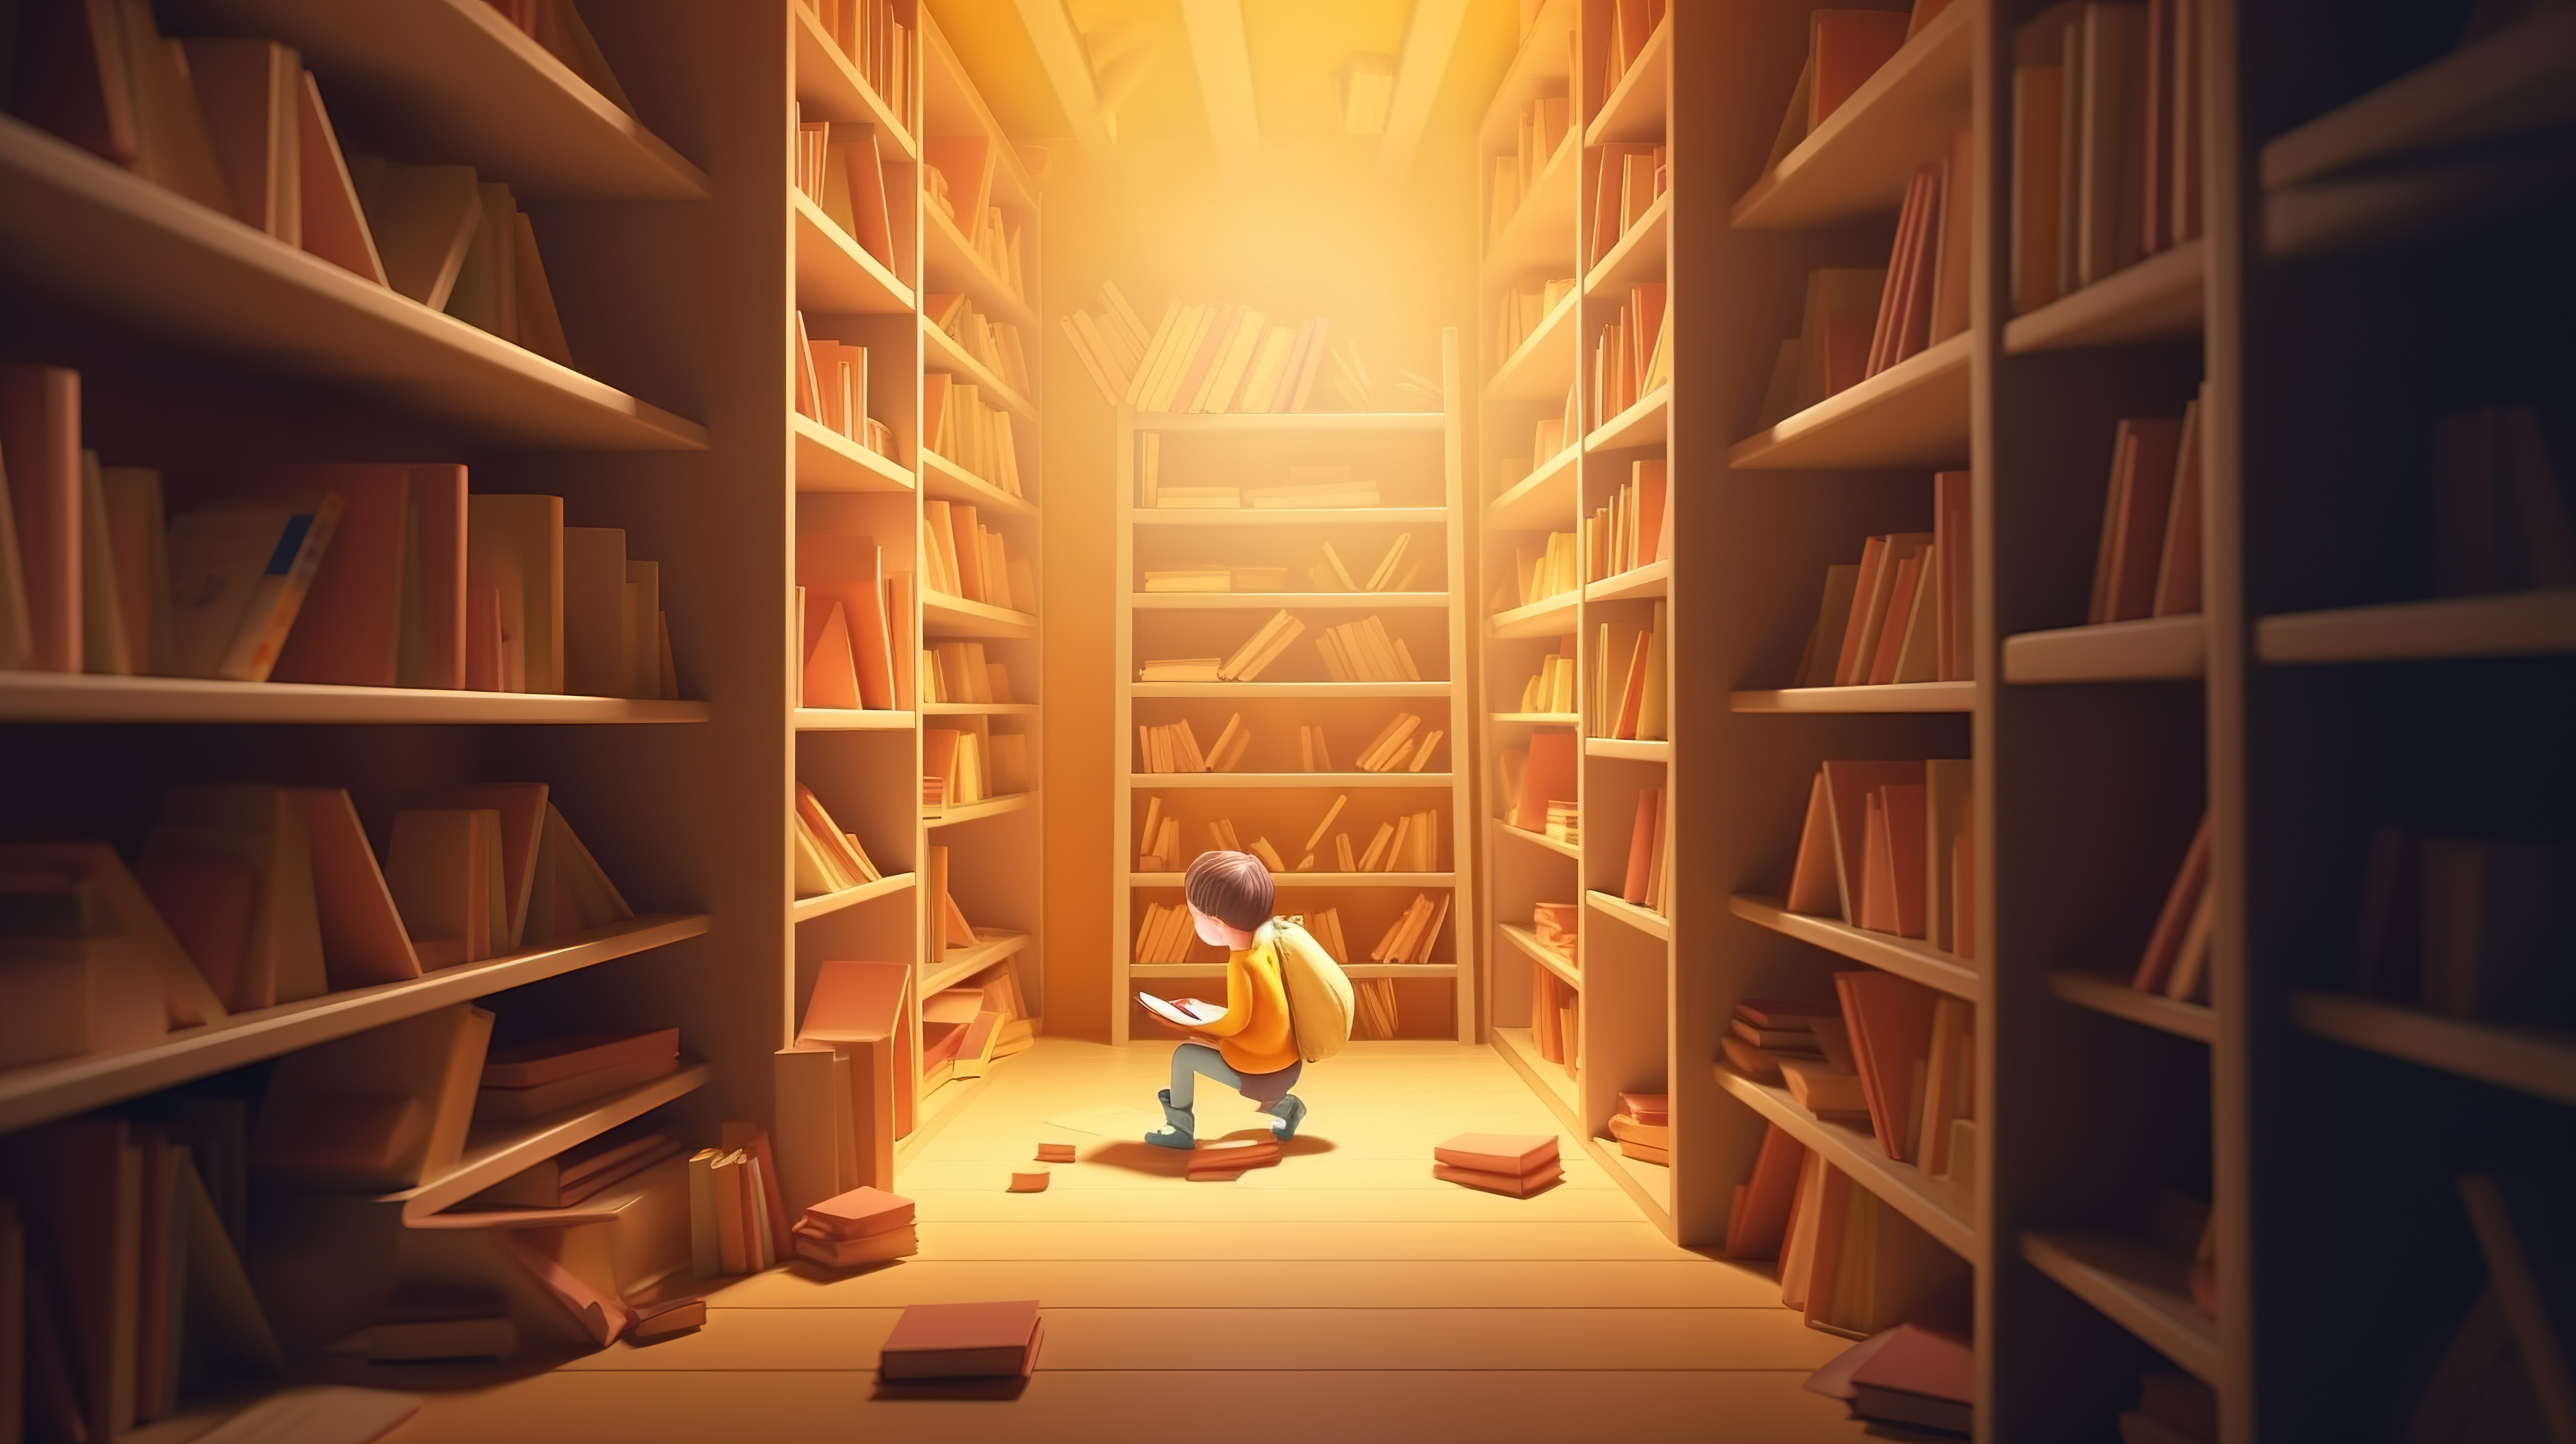 3D 图书馆背景，孩子专心阅读儿童书籍图片